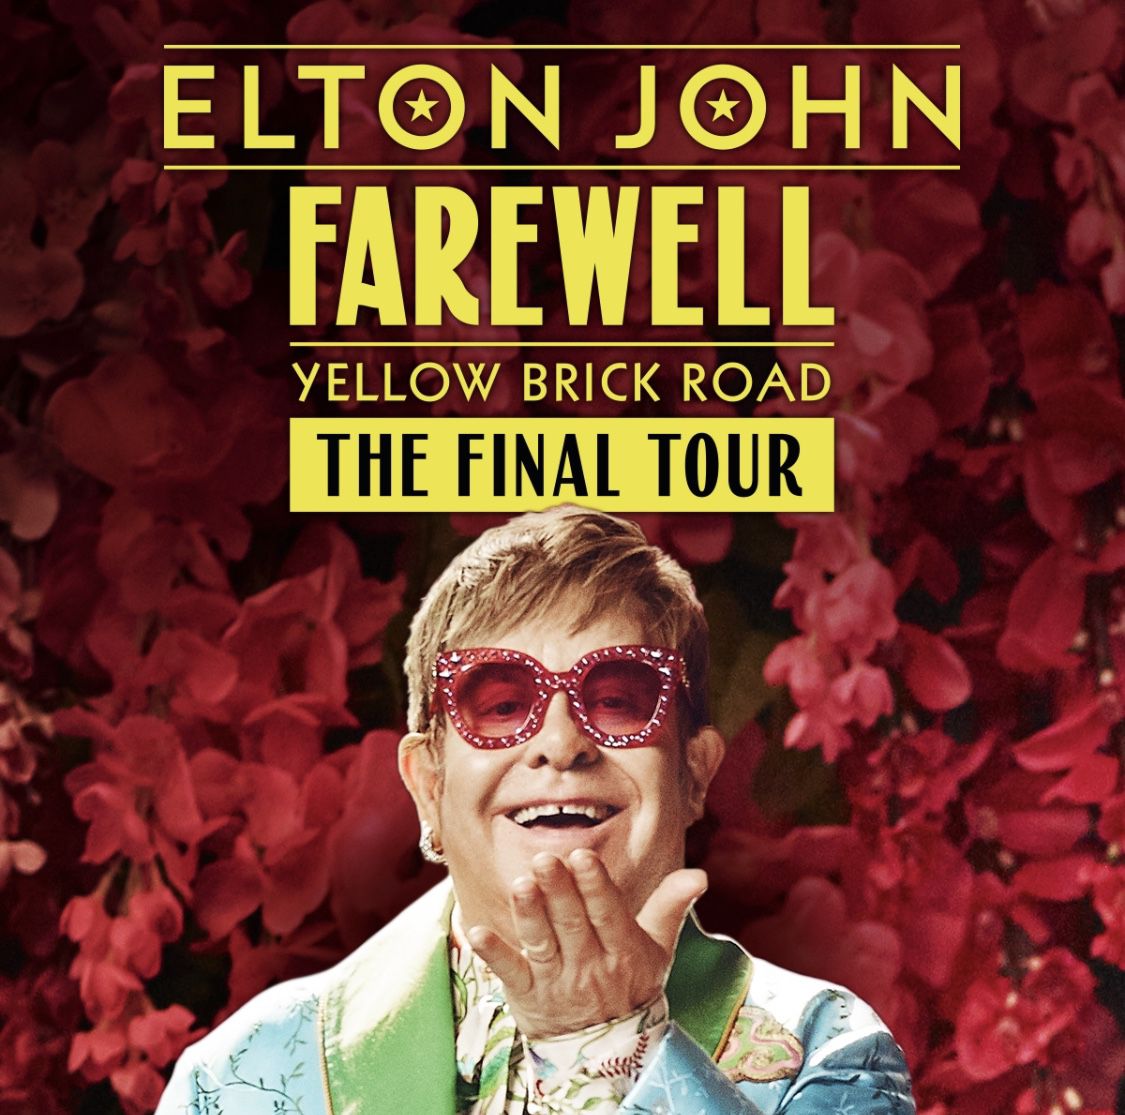 Elton John Concert - 2 Tickets Lower level